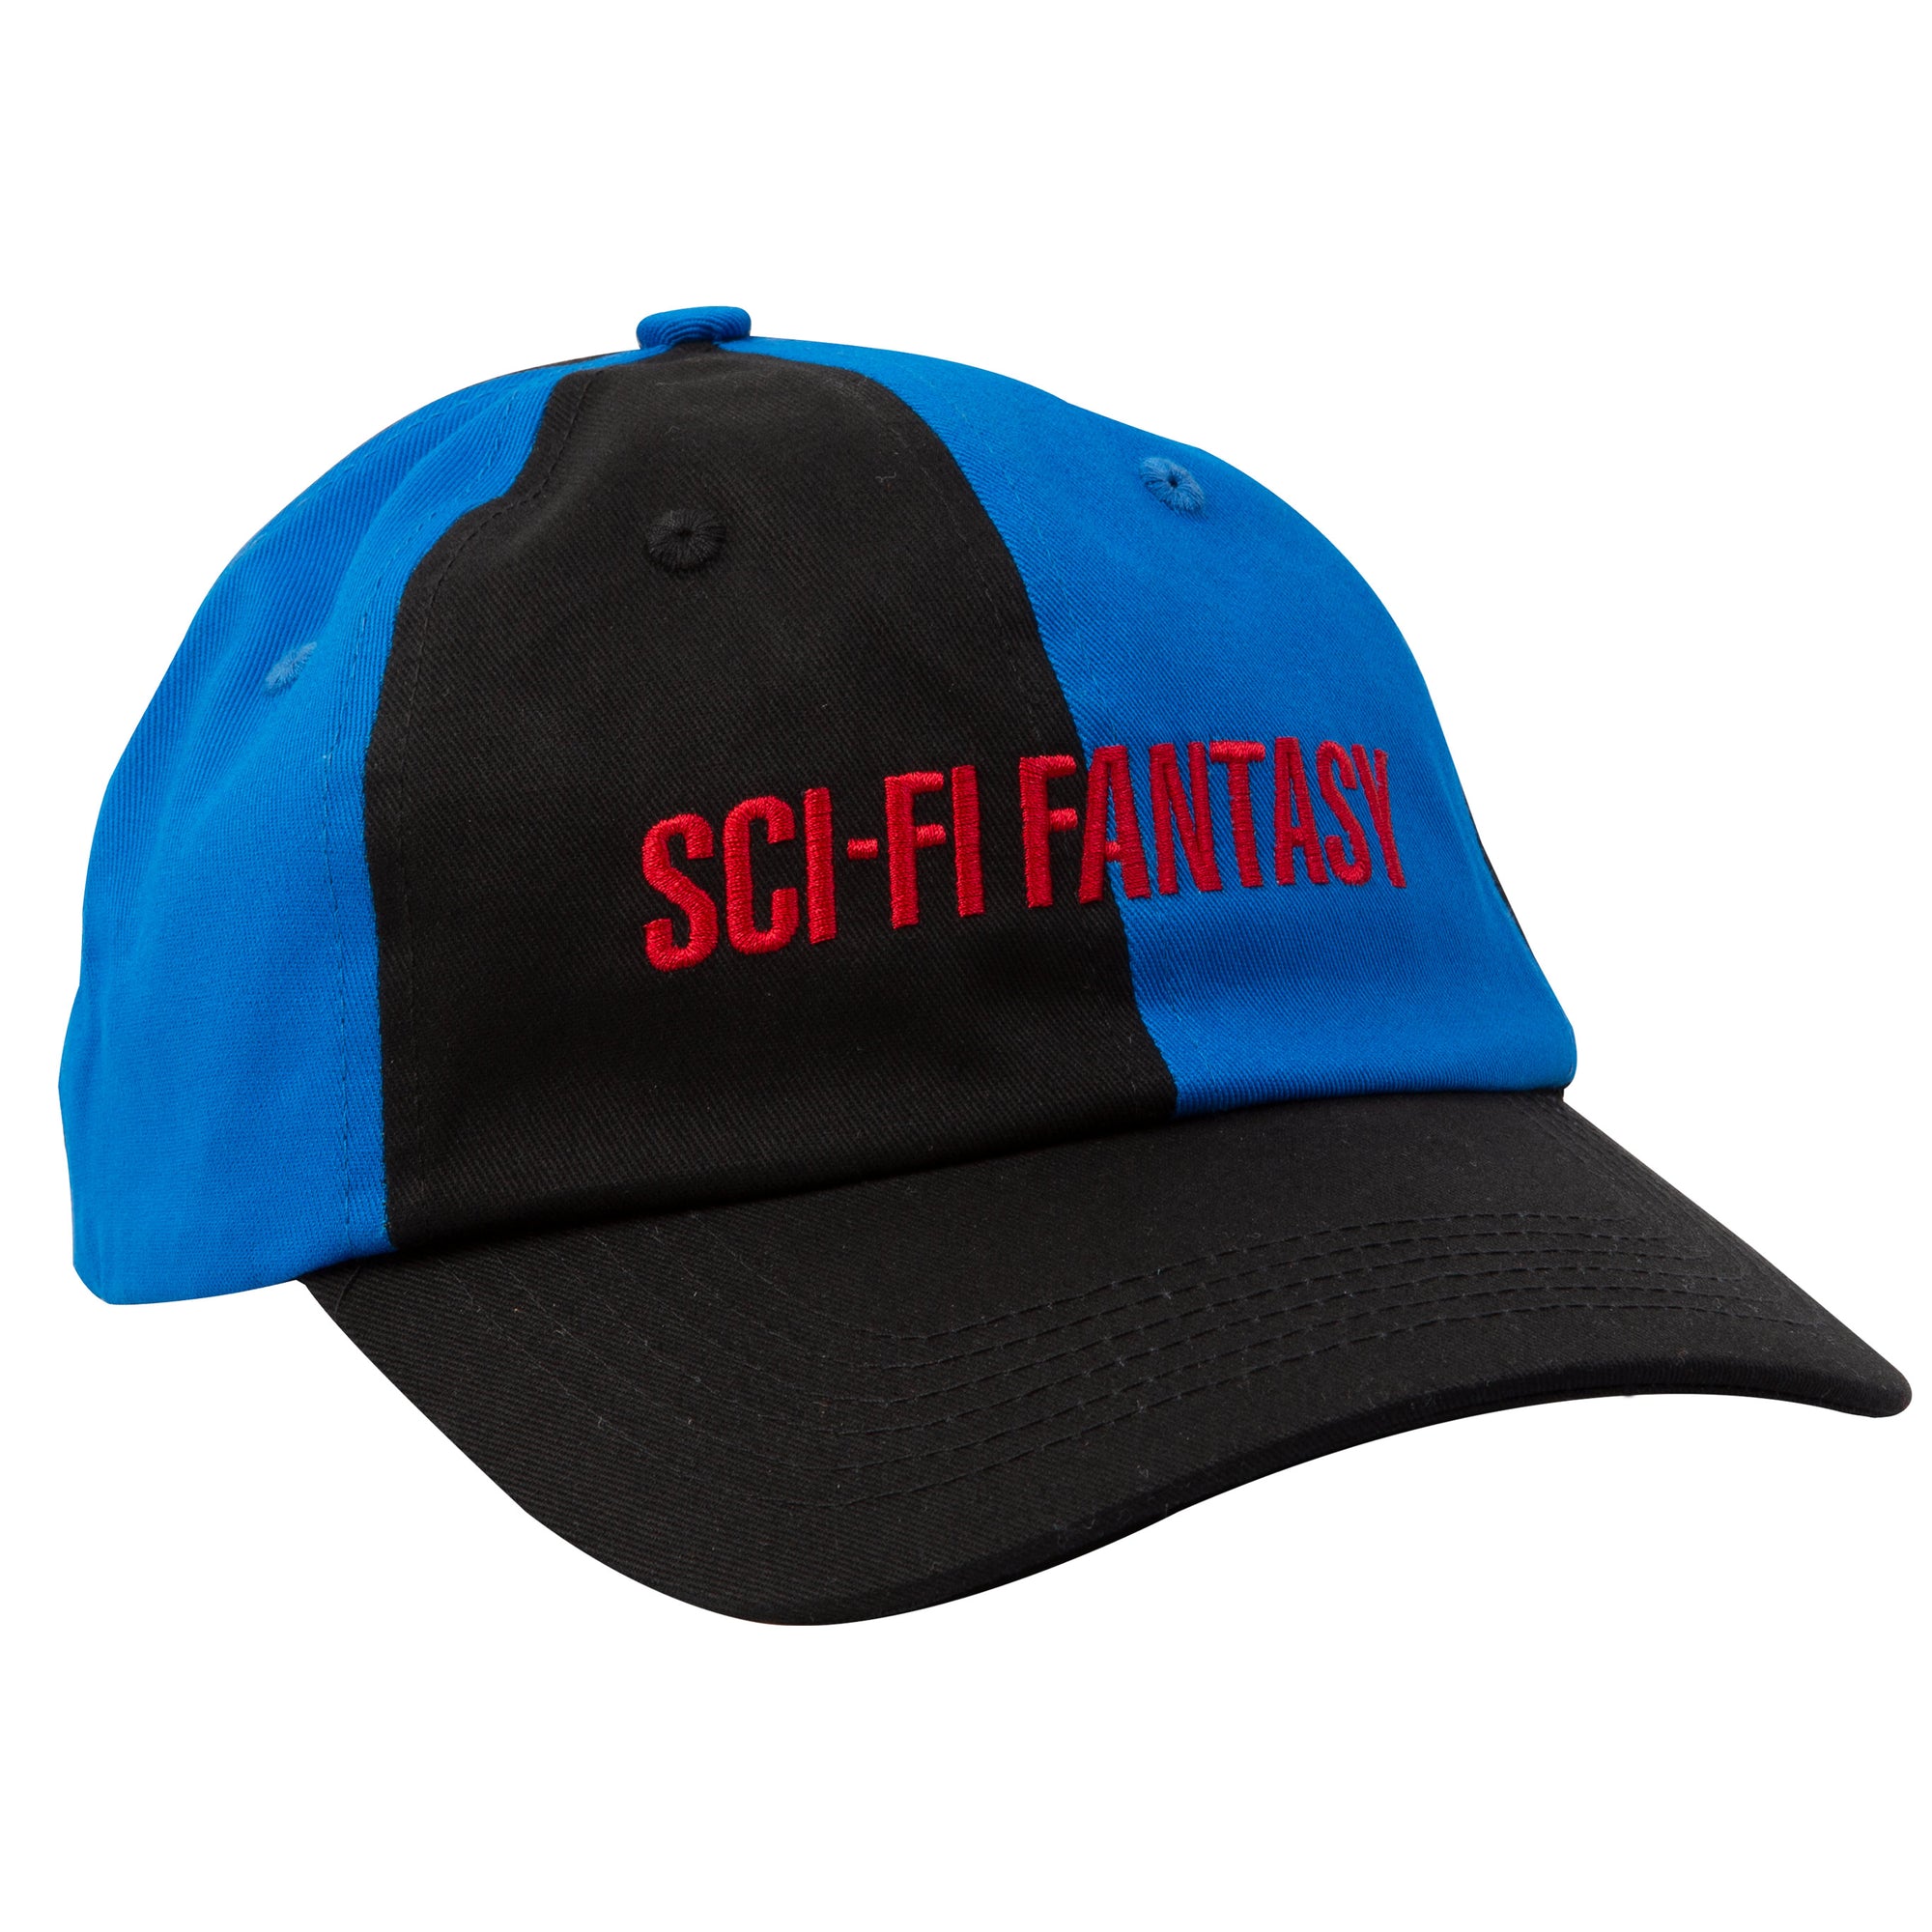 Sci-Fi Fantasy 2 Tone Hat Black/Royal